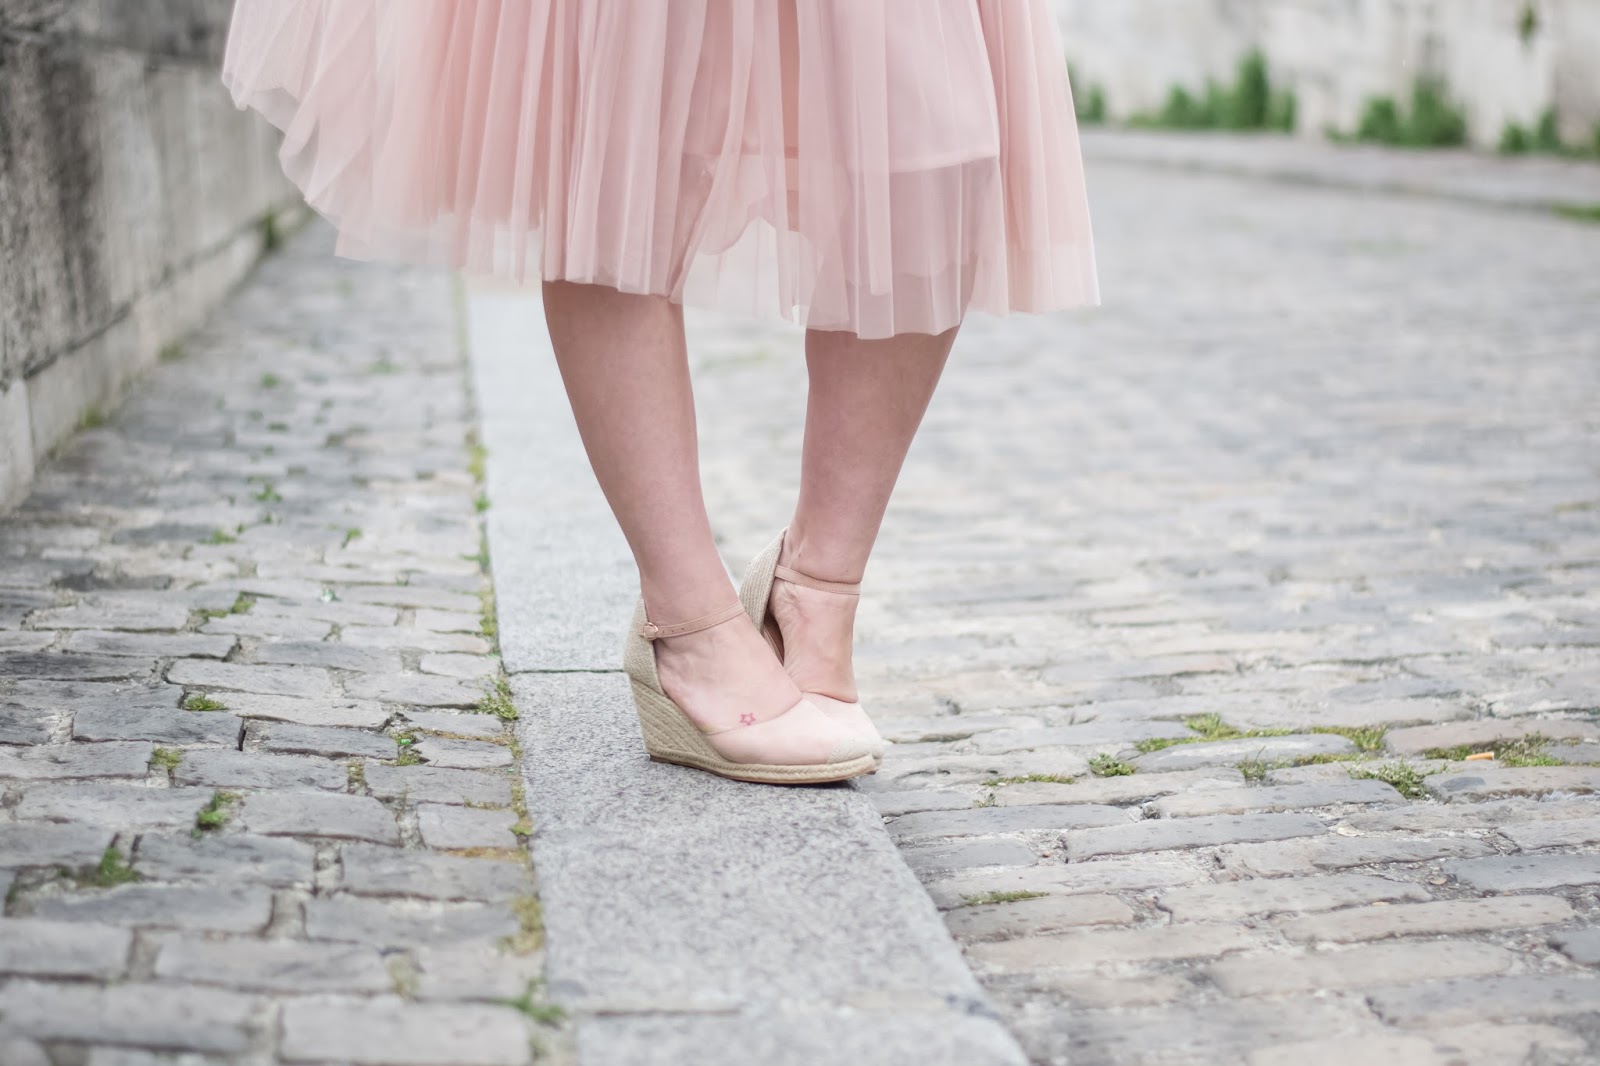 meetmeinparee, paris blogger, fashion, look, style, chic parisian style, spring look, pink tutu skirt